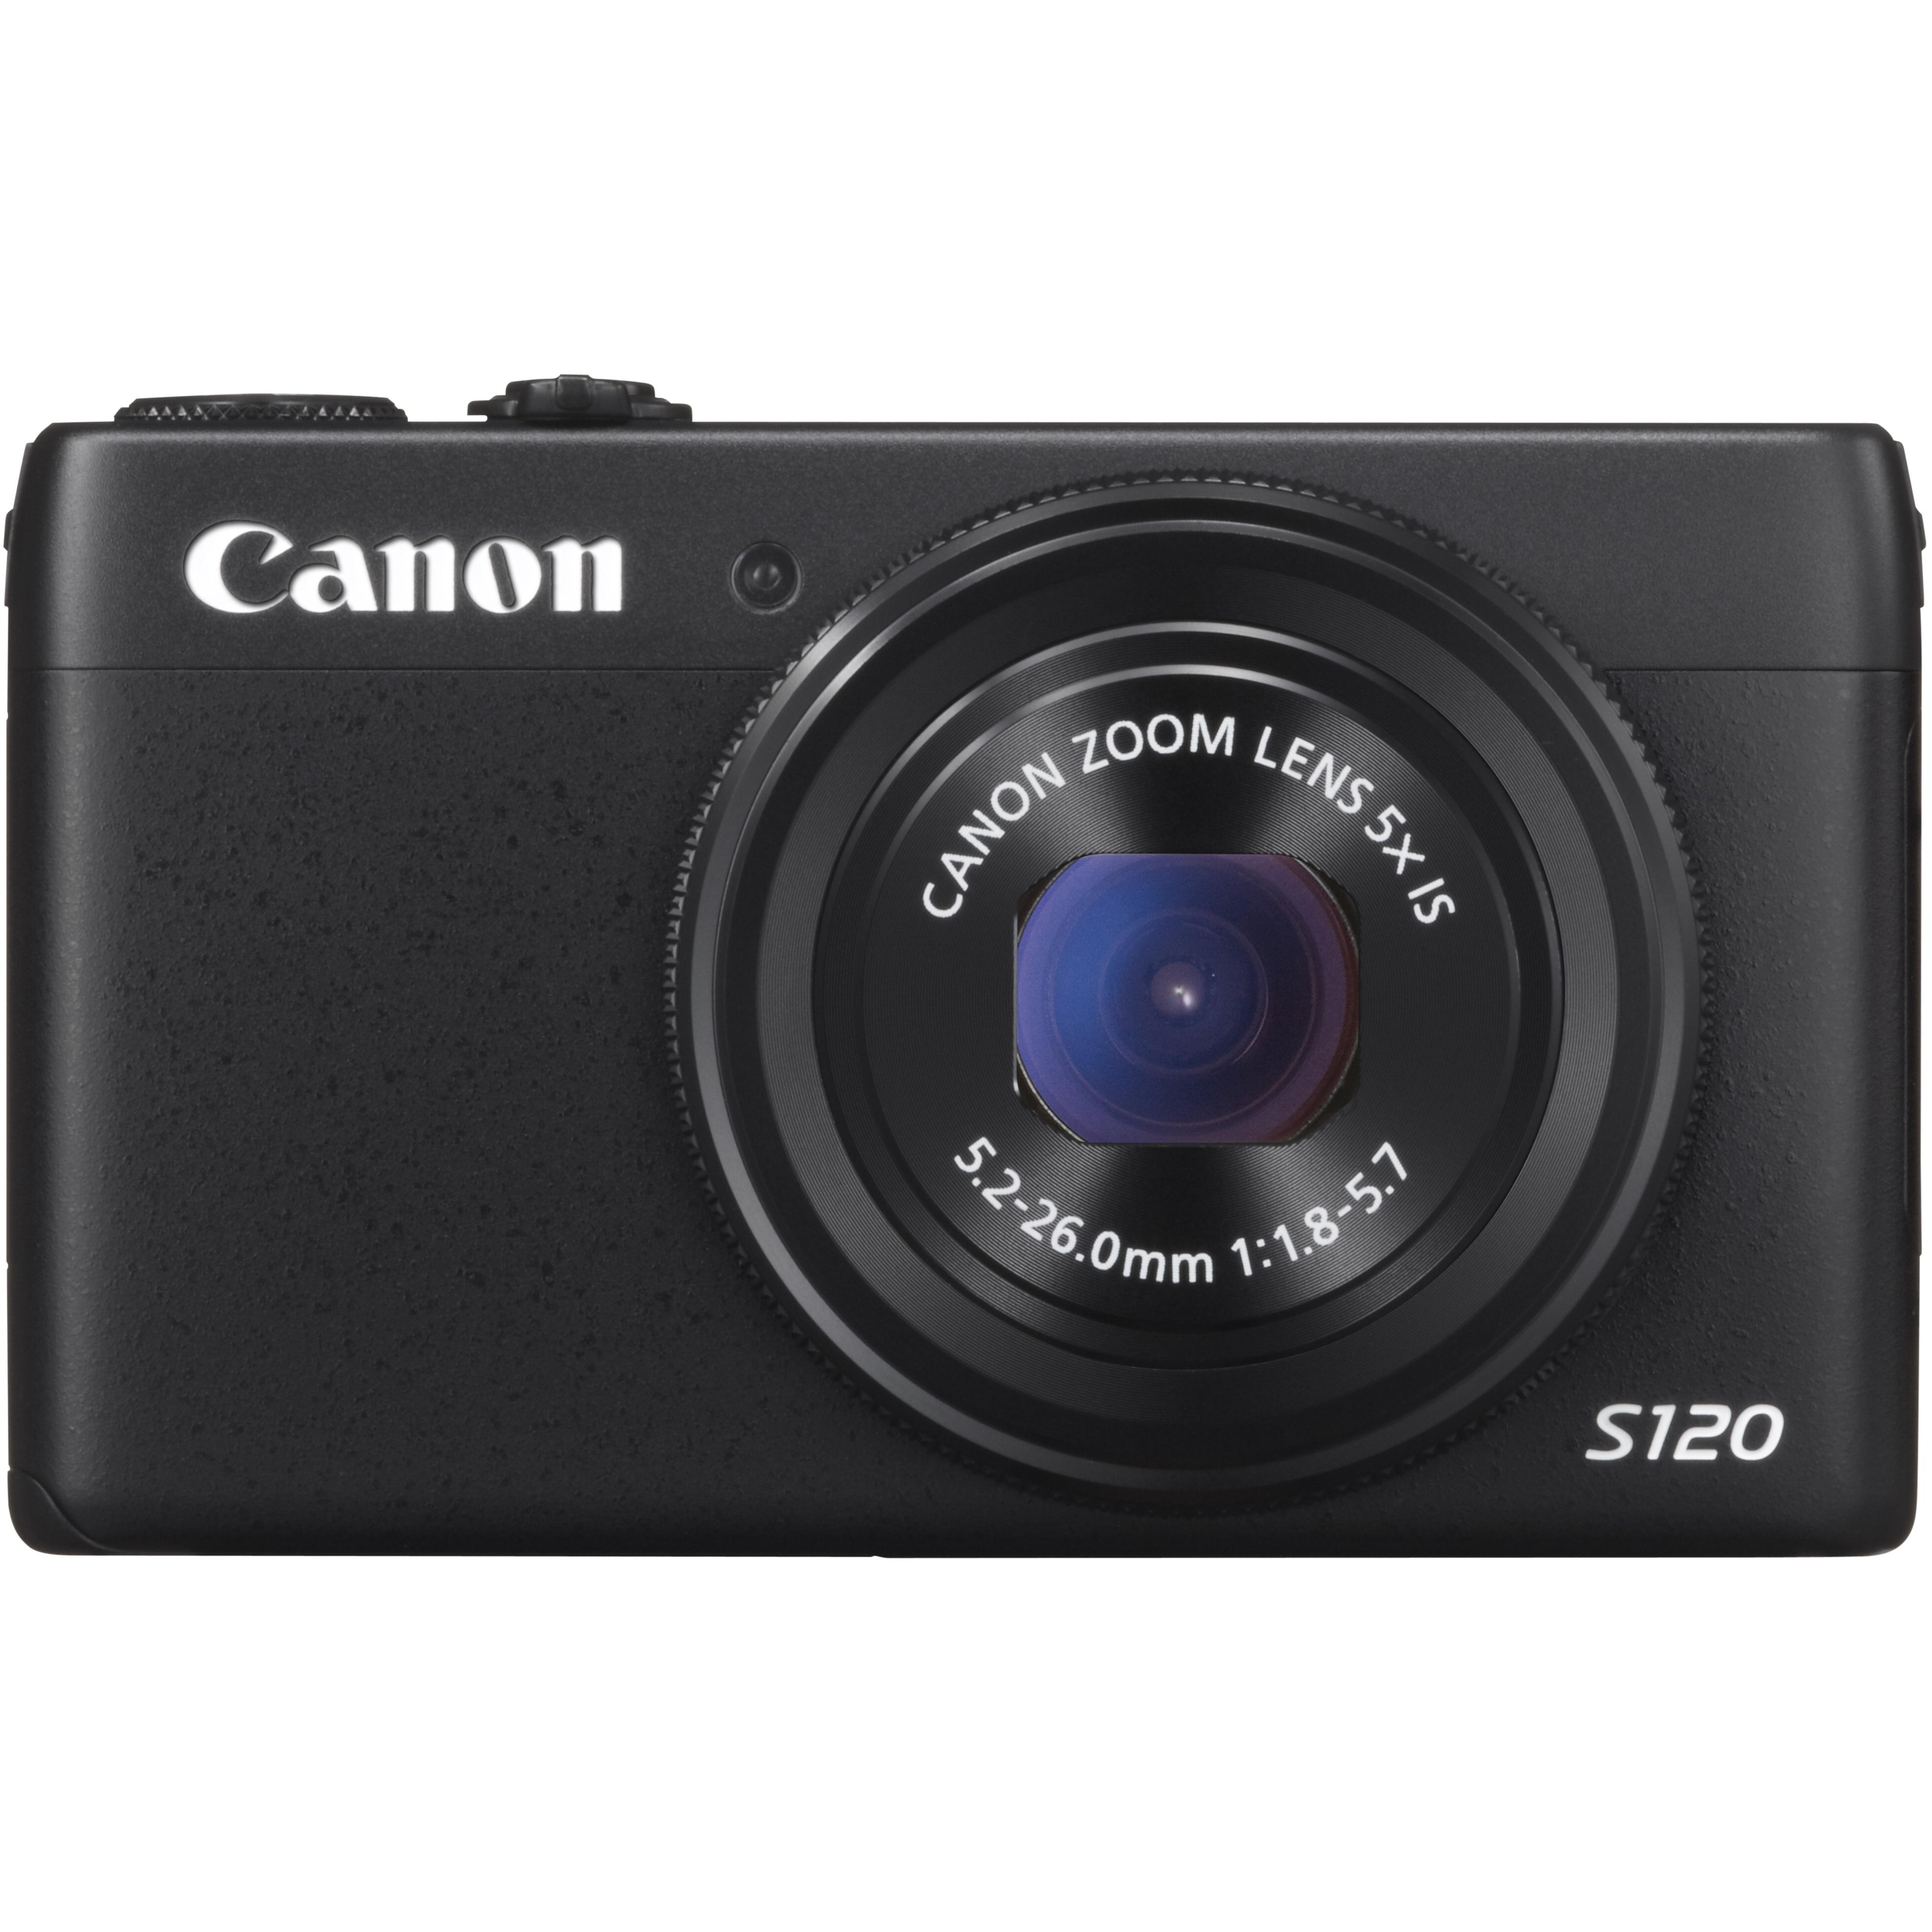 Canon PowerShot S120 12.1 Megapixel Compact Camera, Black - image 2 of 6